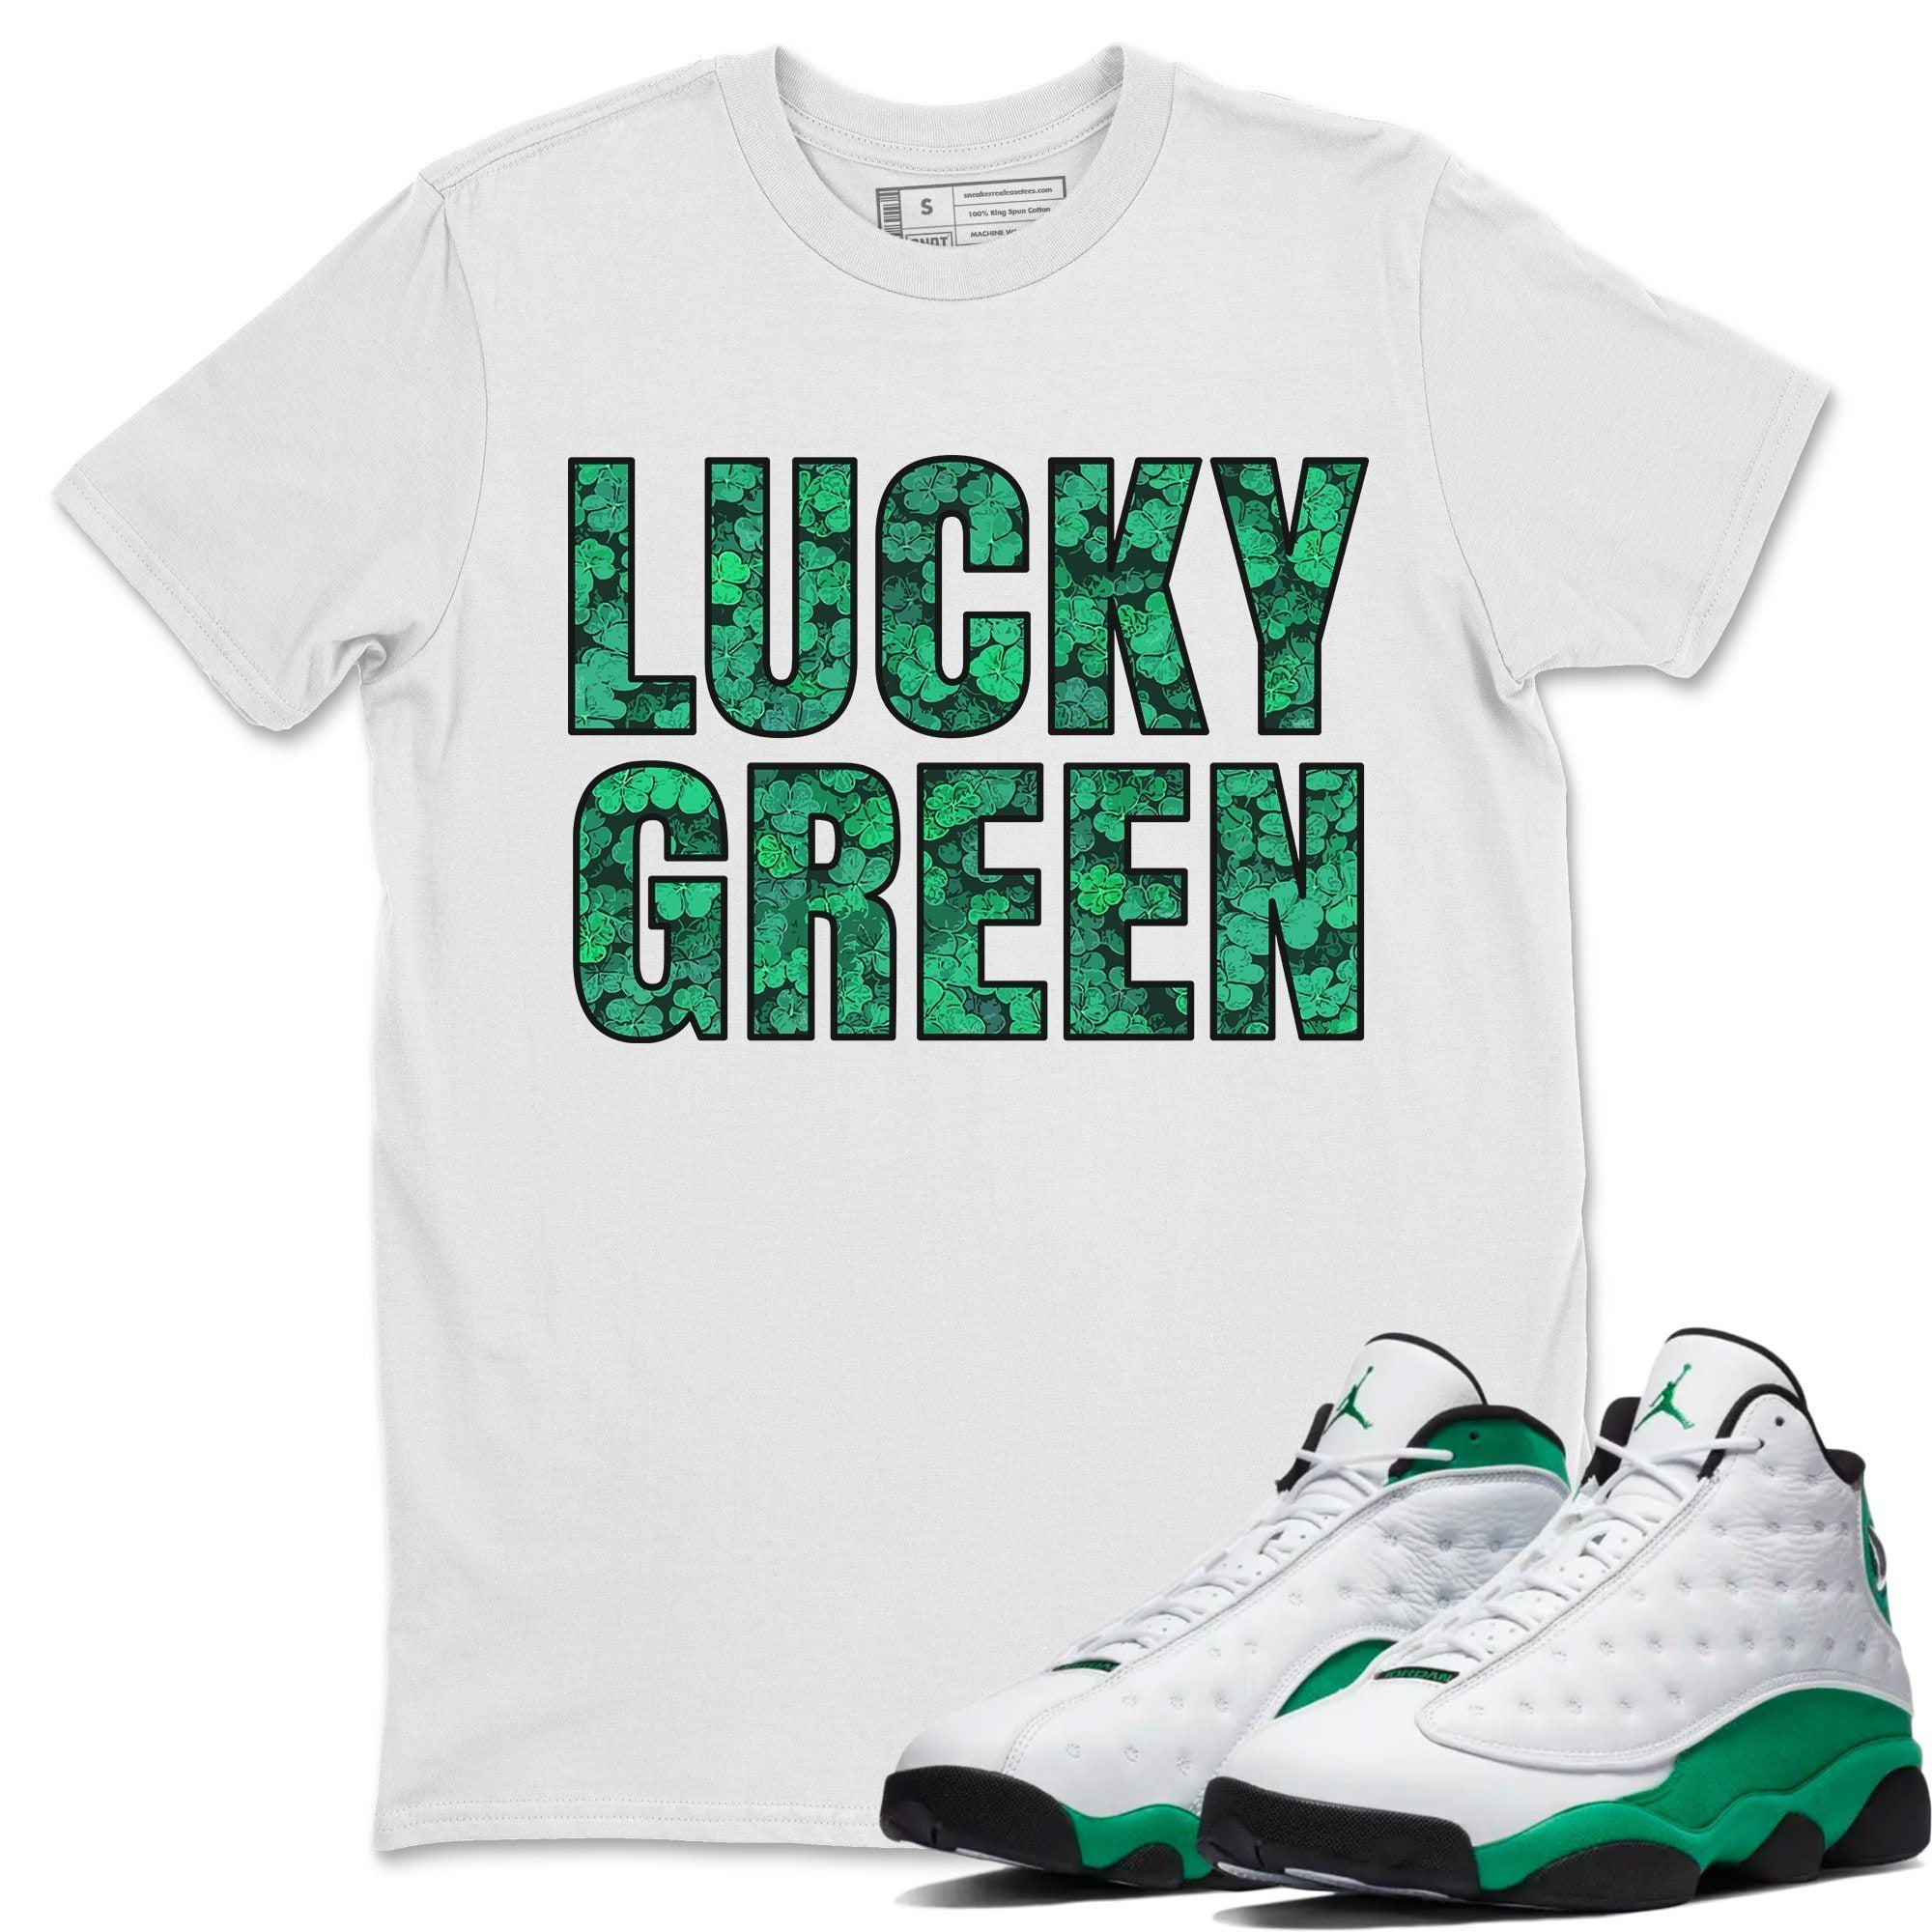 green jordan 13 outfit